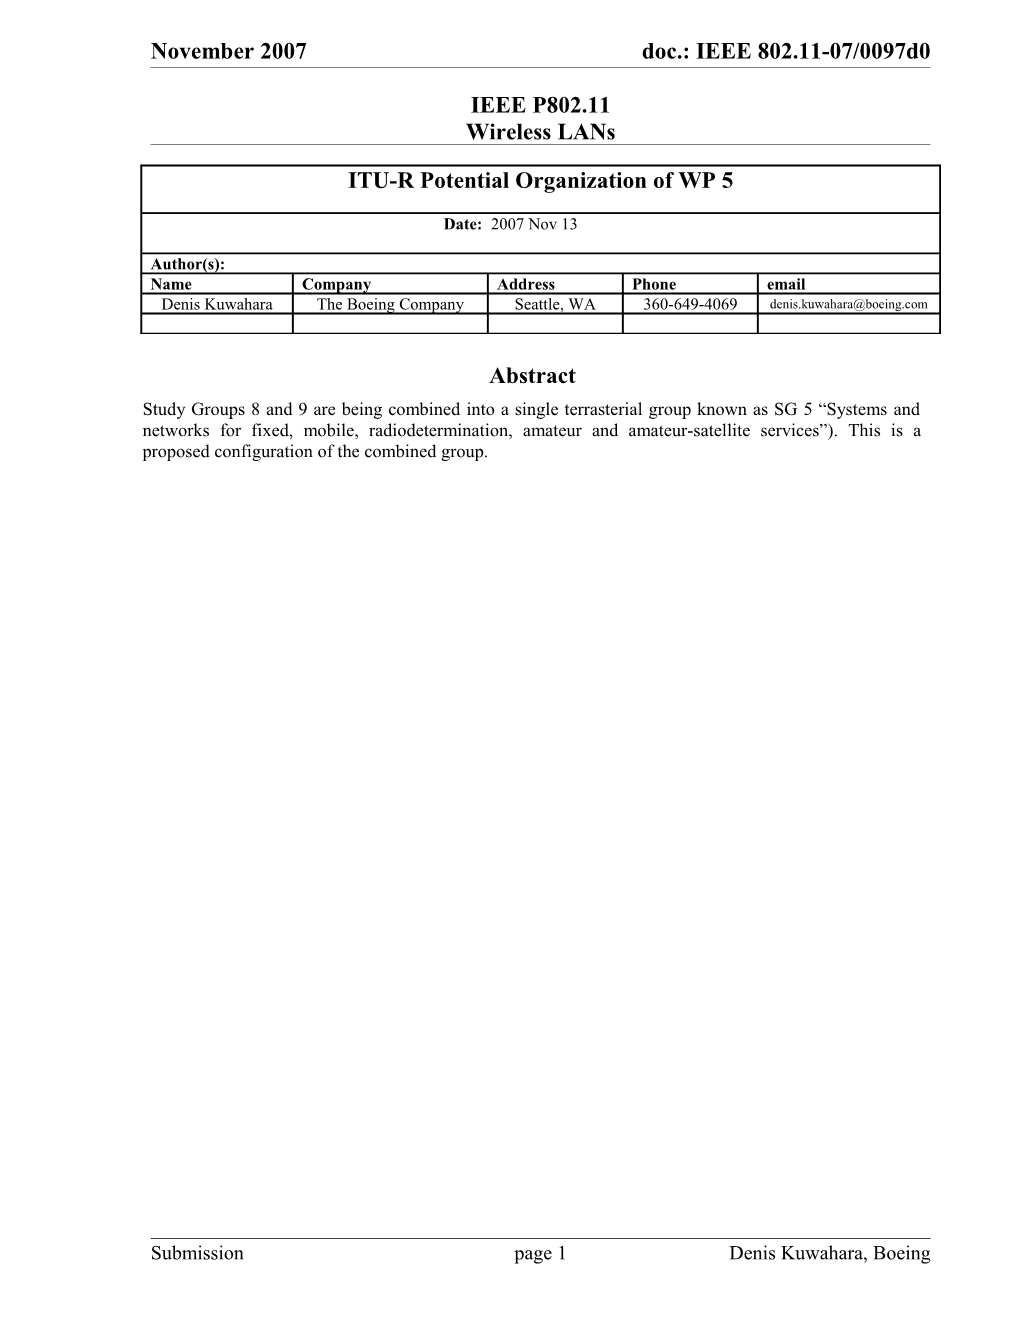 Resolution ITU-R 4-5 Structure of Radiocommunication Study Groups